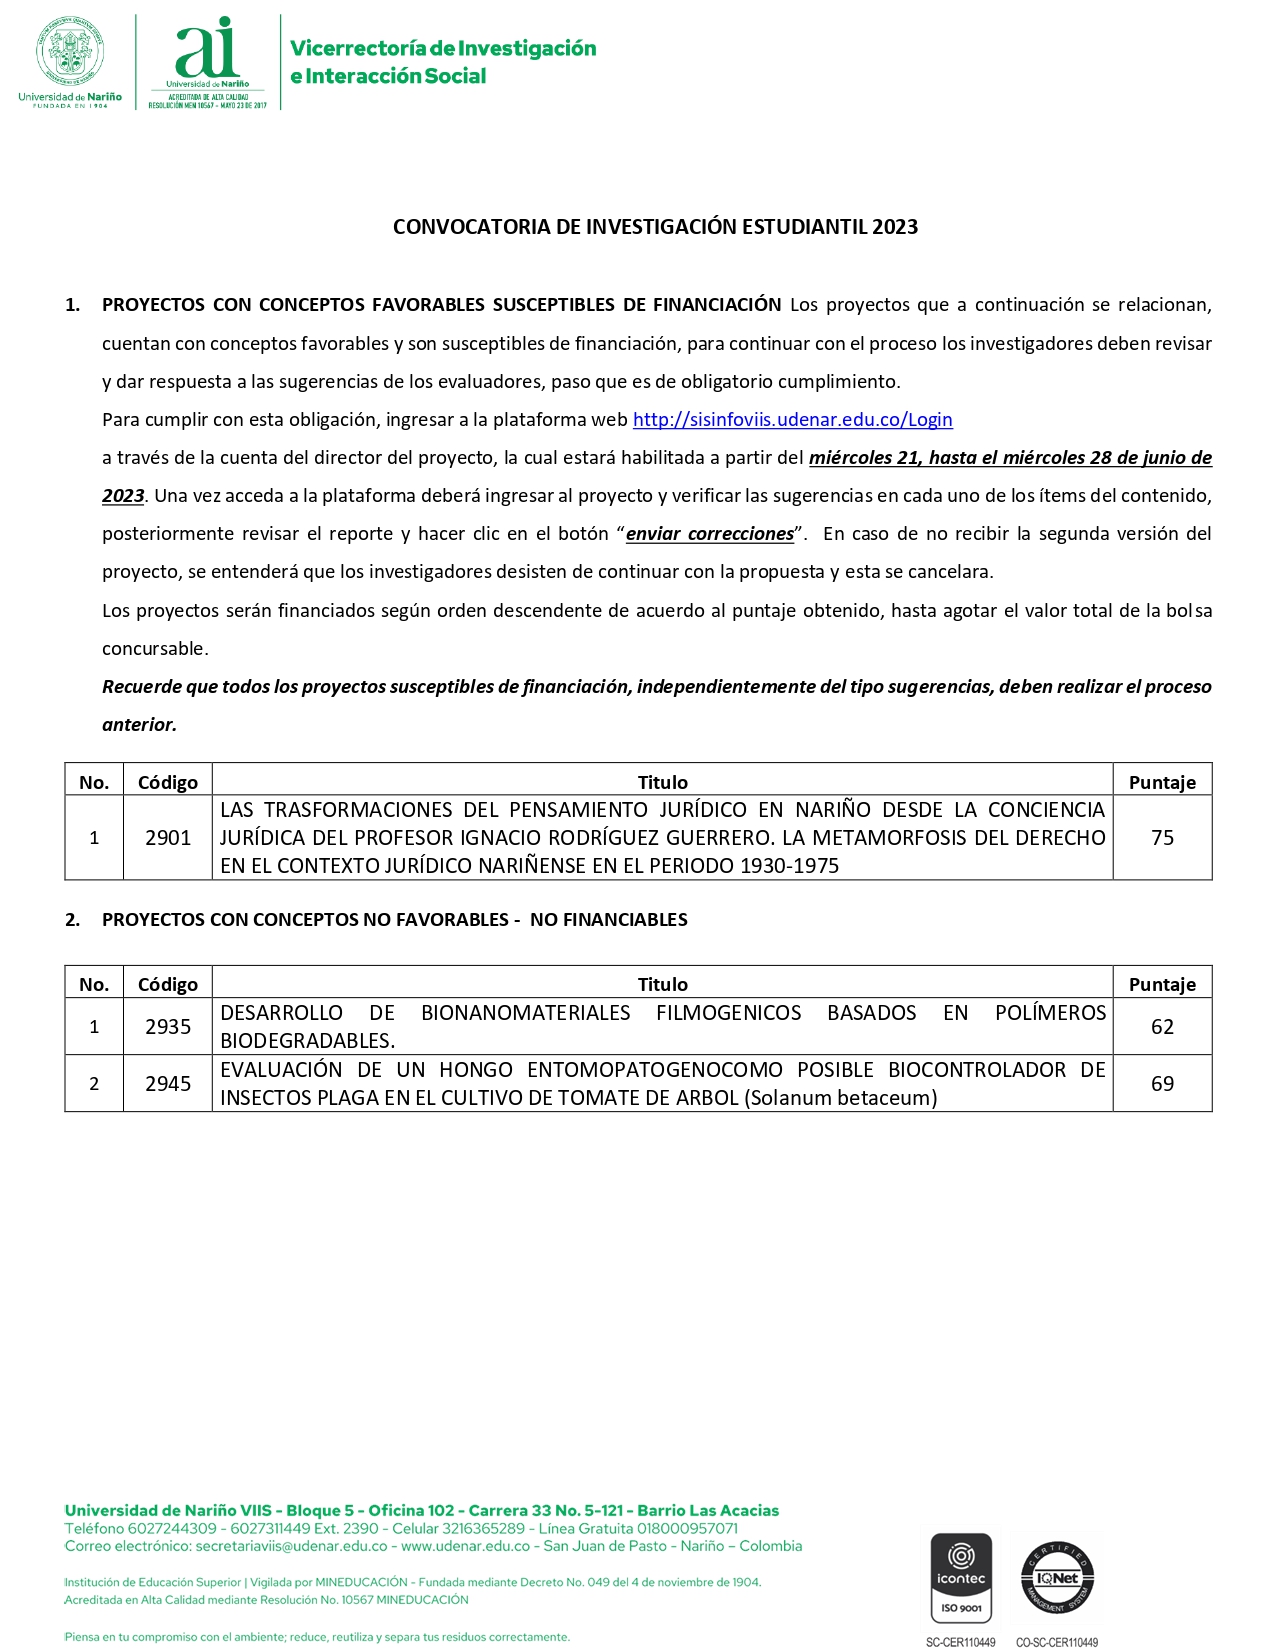 UDENAR-PERIODICO-COMUNICADO-003-CONVOCATORIAS-DE-INVESTIGACION-2_page-0004